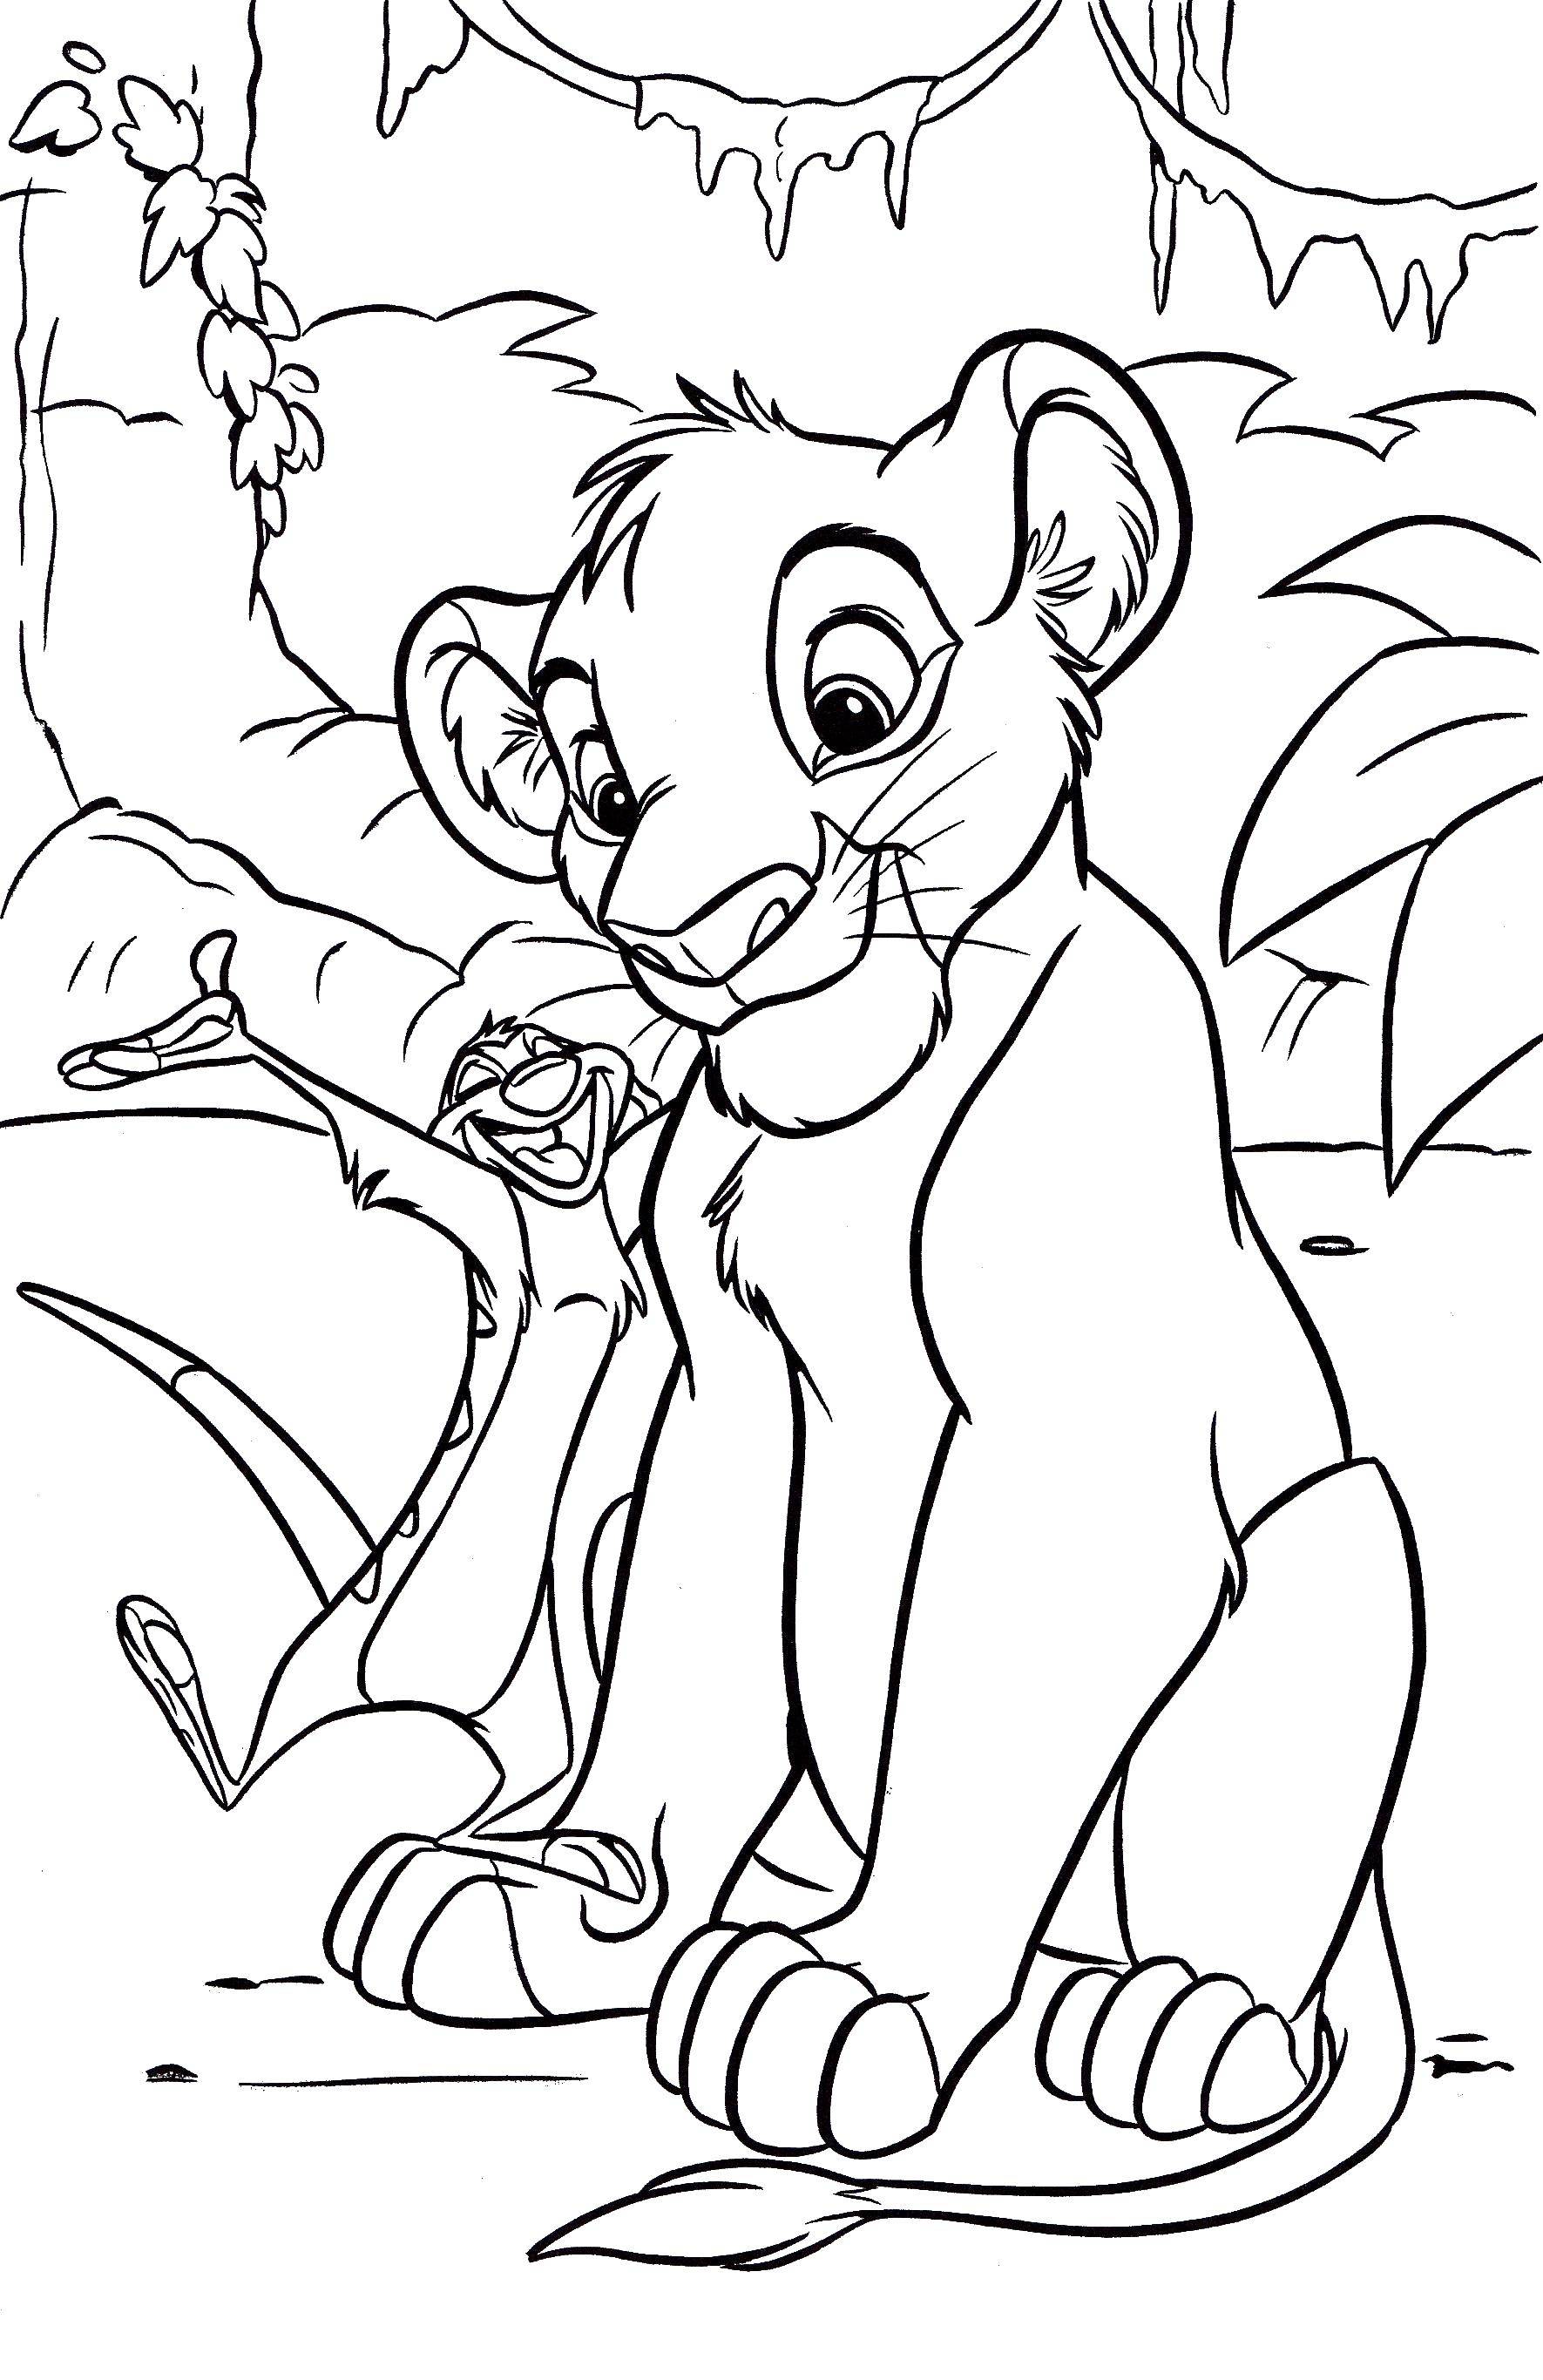 Coloring Simba hugs Timon. Category The lion king. Tags:  Simba, lion.